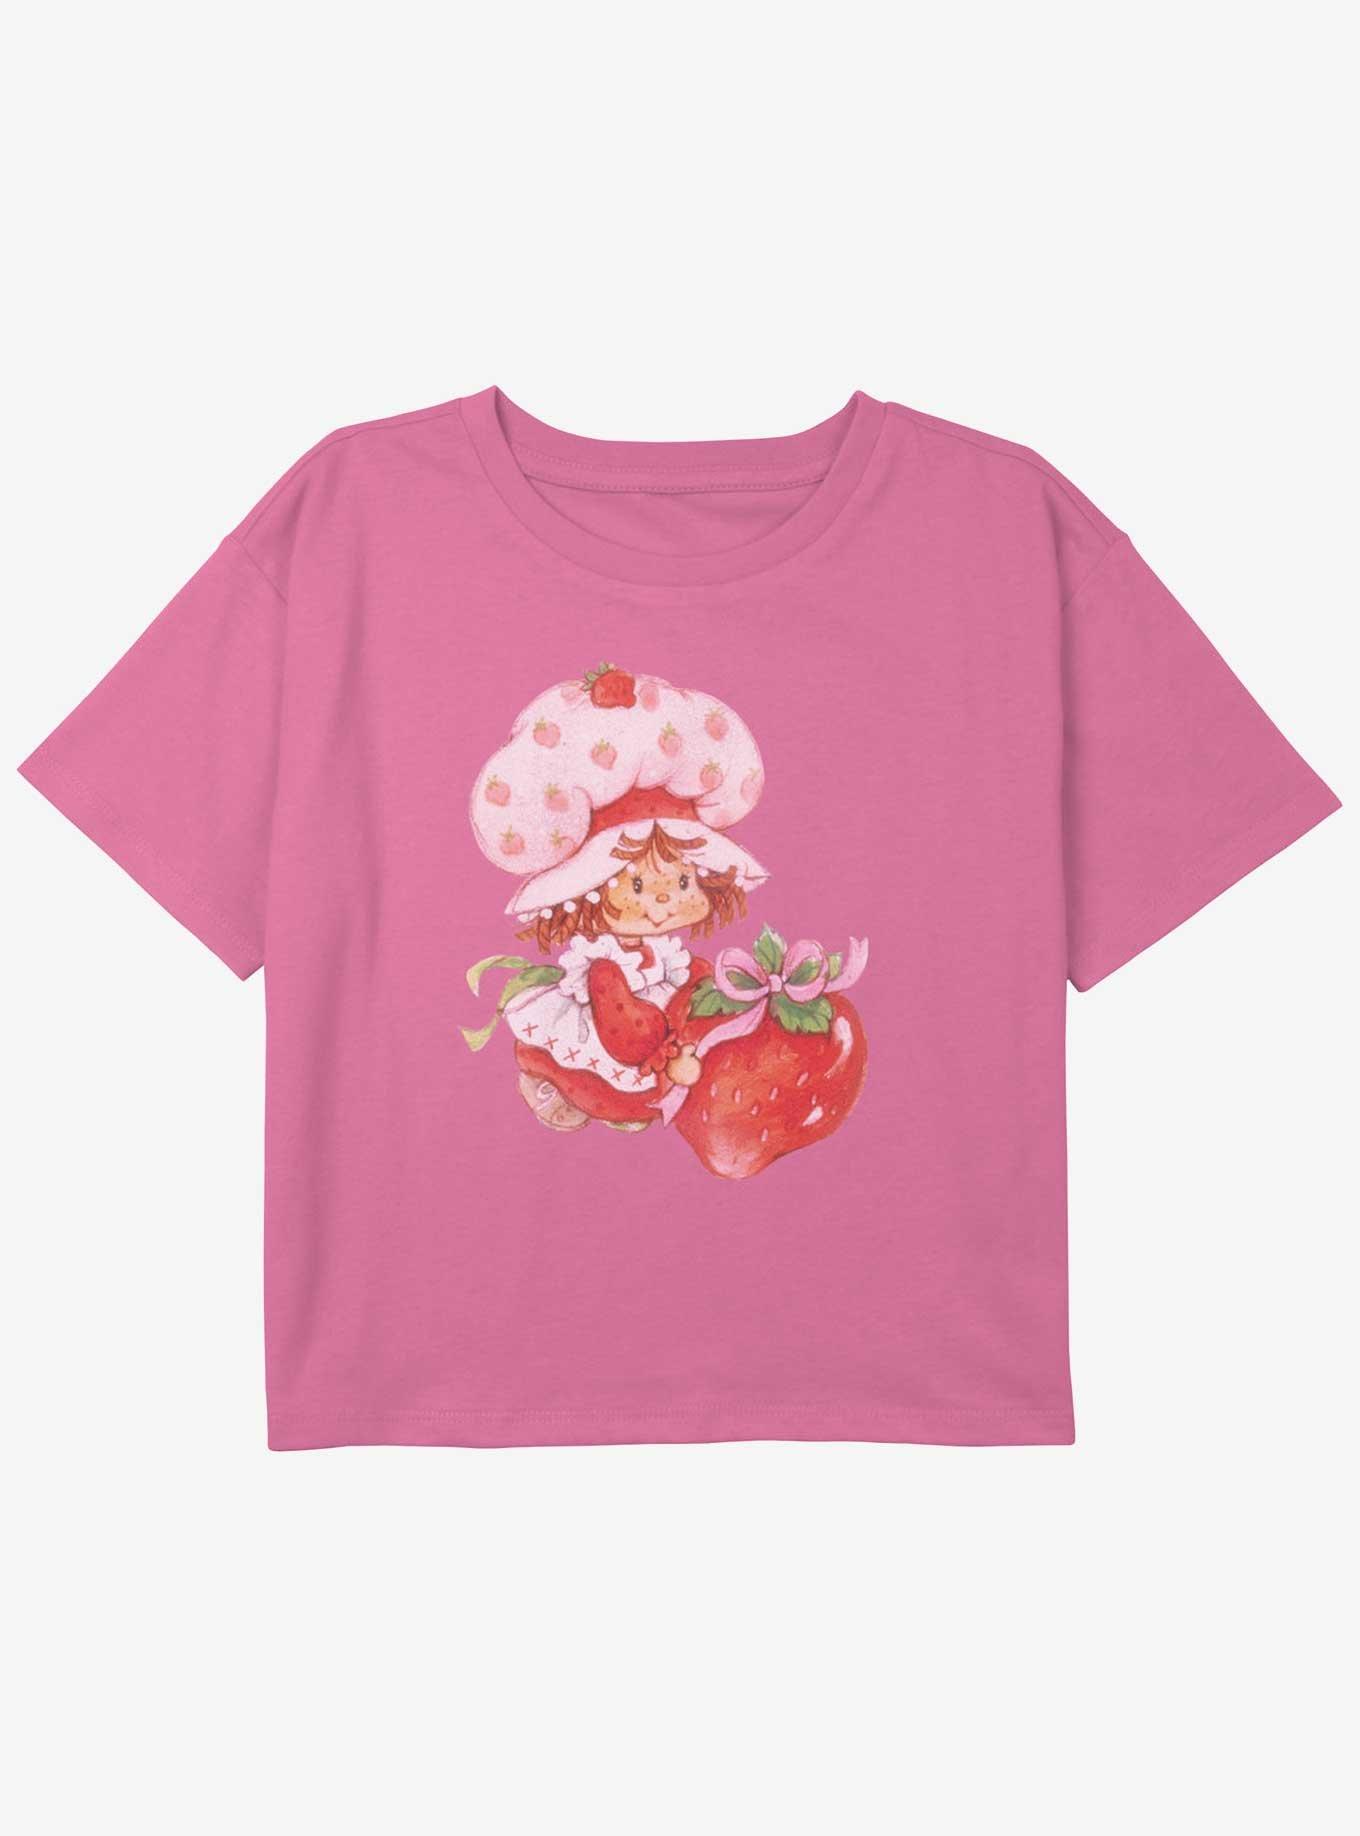 Strawberry Shortcake Bows & Strawberries Youth Girls Boxy Crop T-Shirt, PINK, hi-res